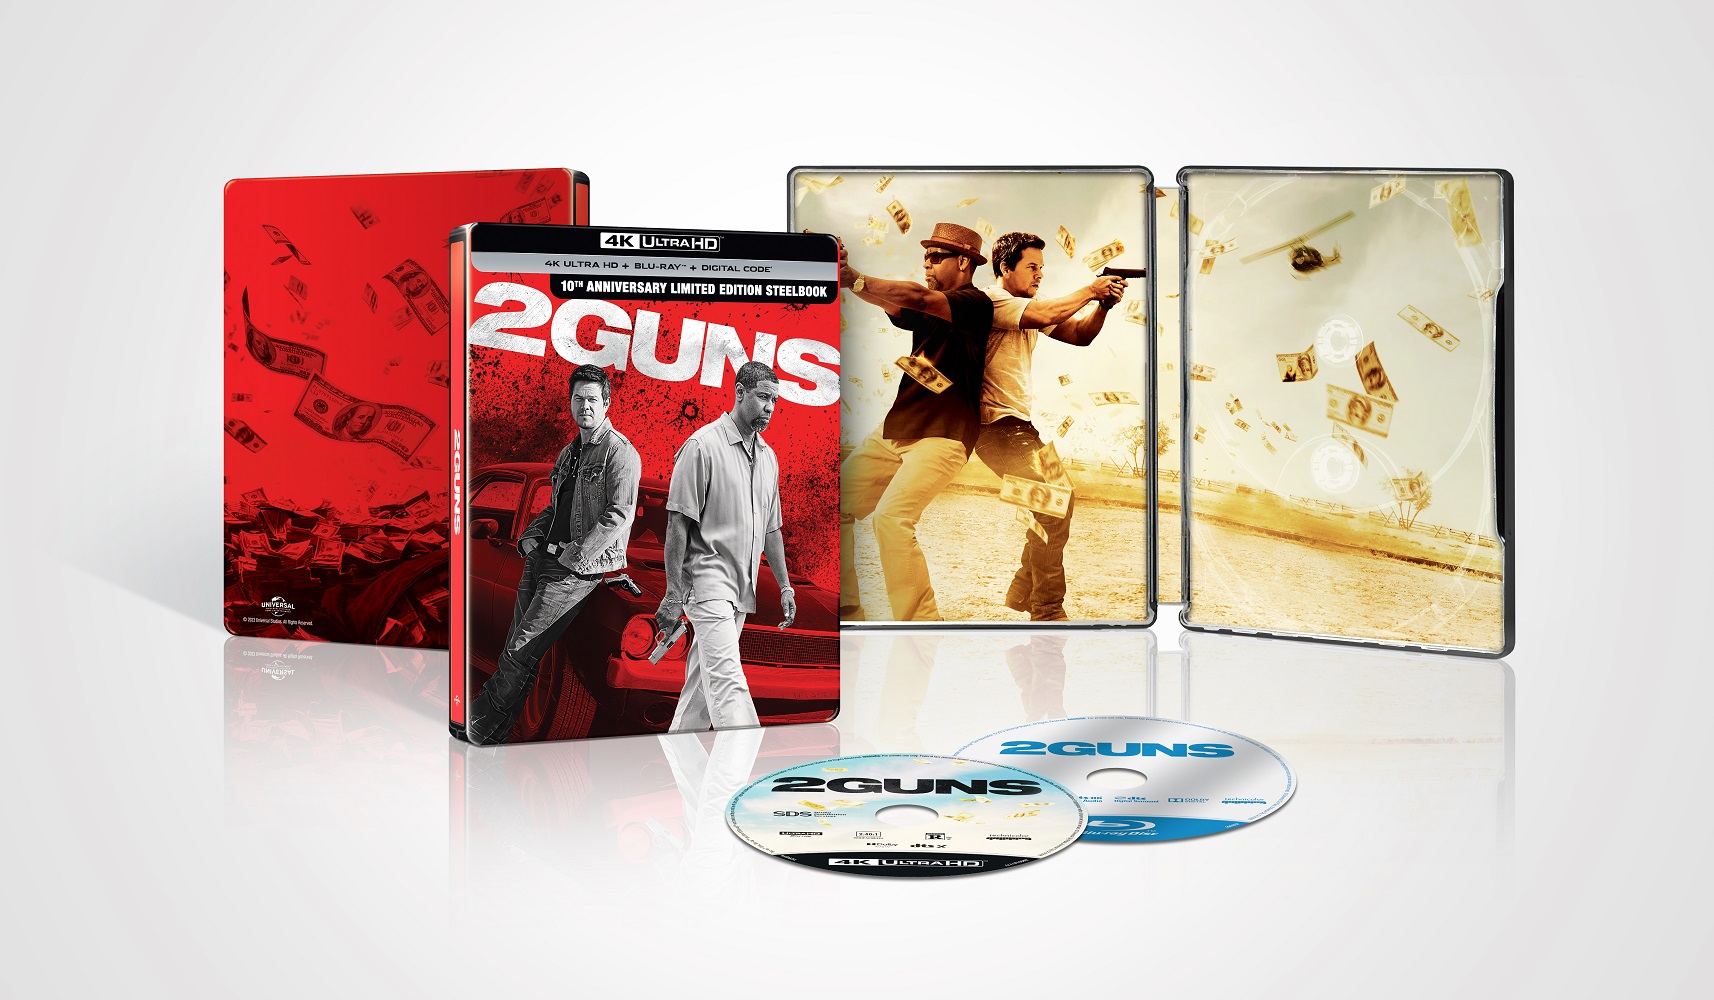 2 Guns [Includes Digital Copy][SteelBook] [4k Ultra HD Blu-ray/Blu ray] -  Best Buy